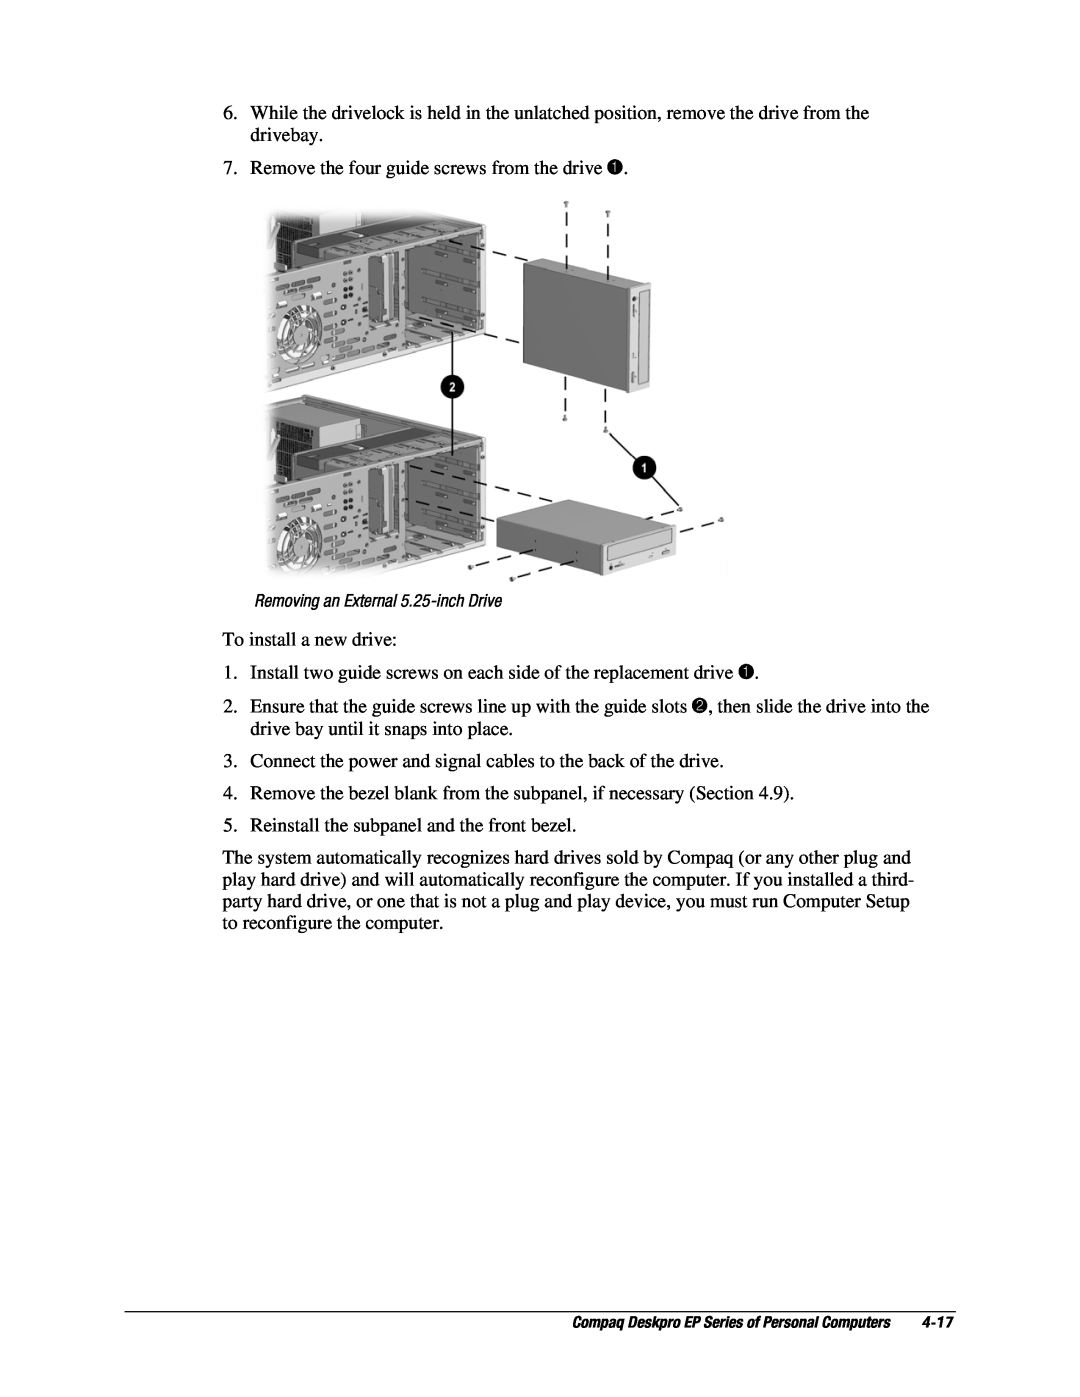 Compaq EP Series manual Removing an External 5.25-inch Drive 